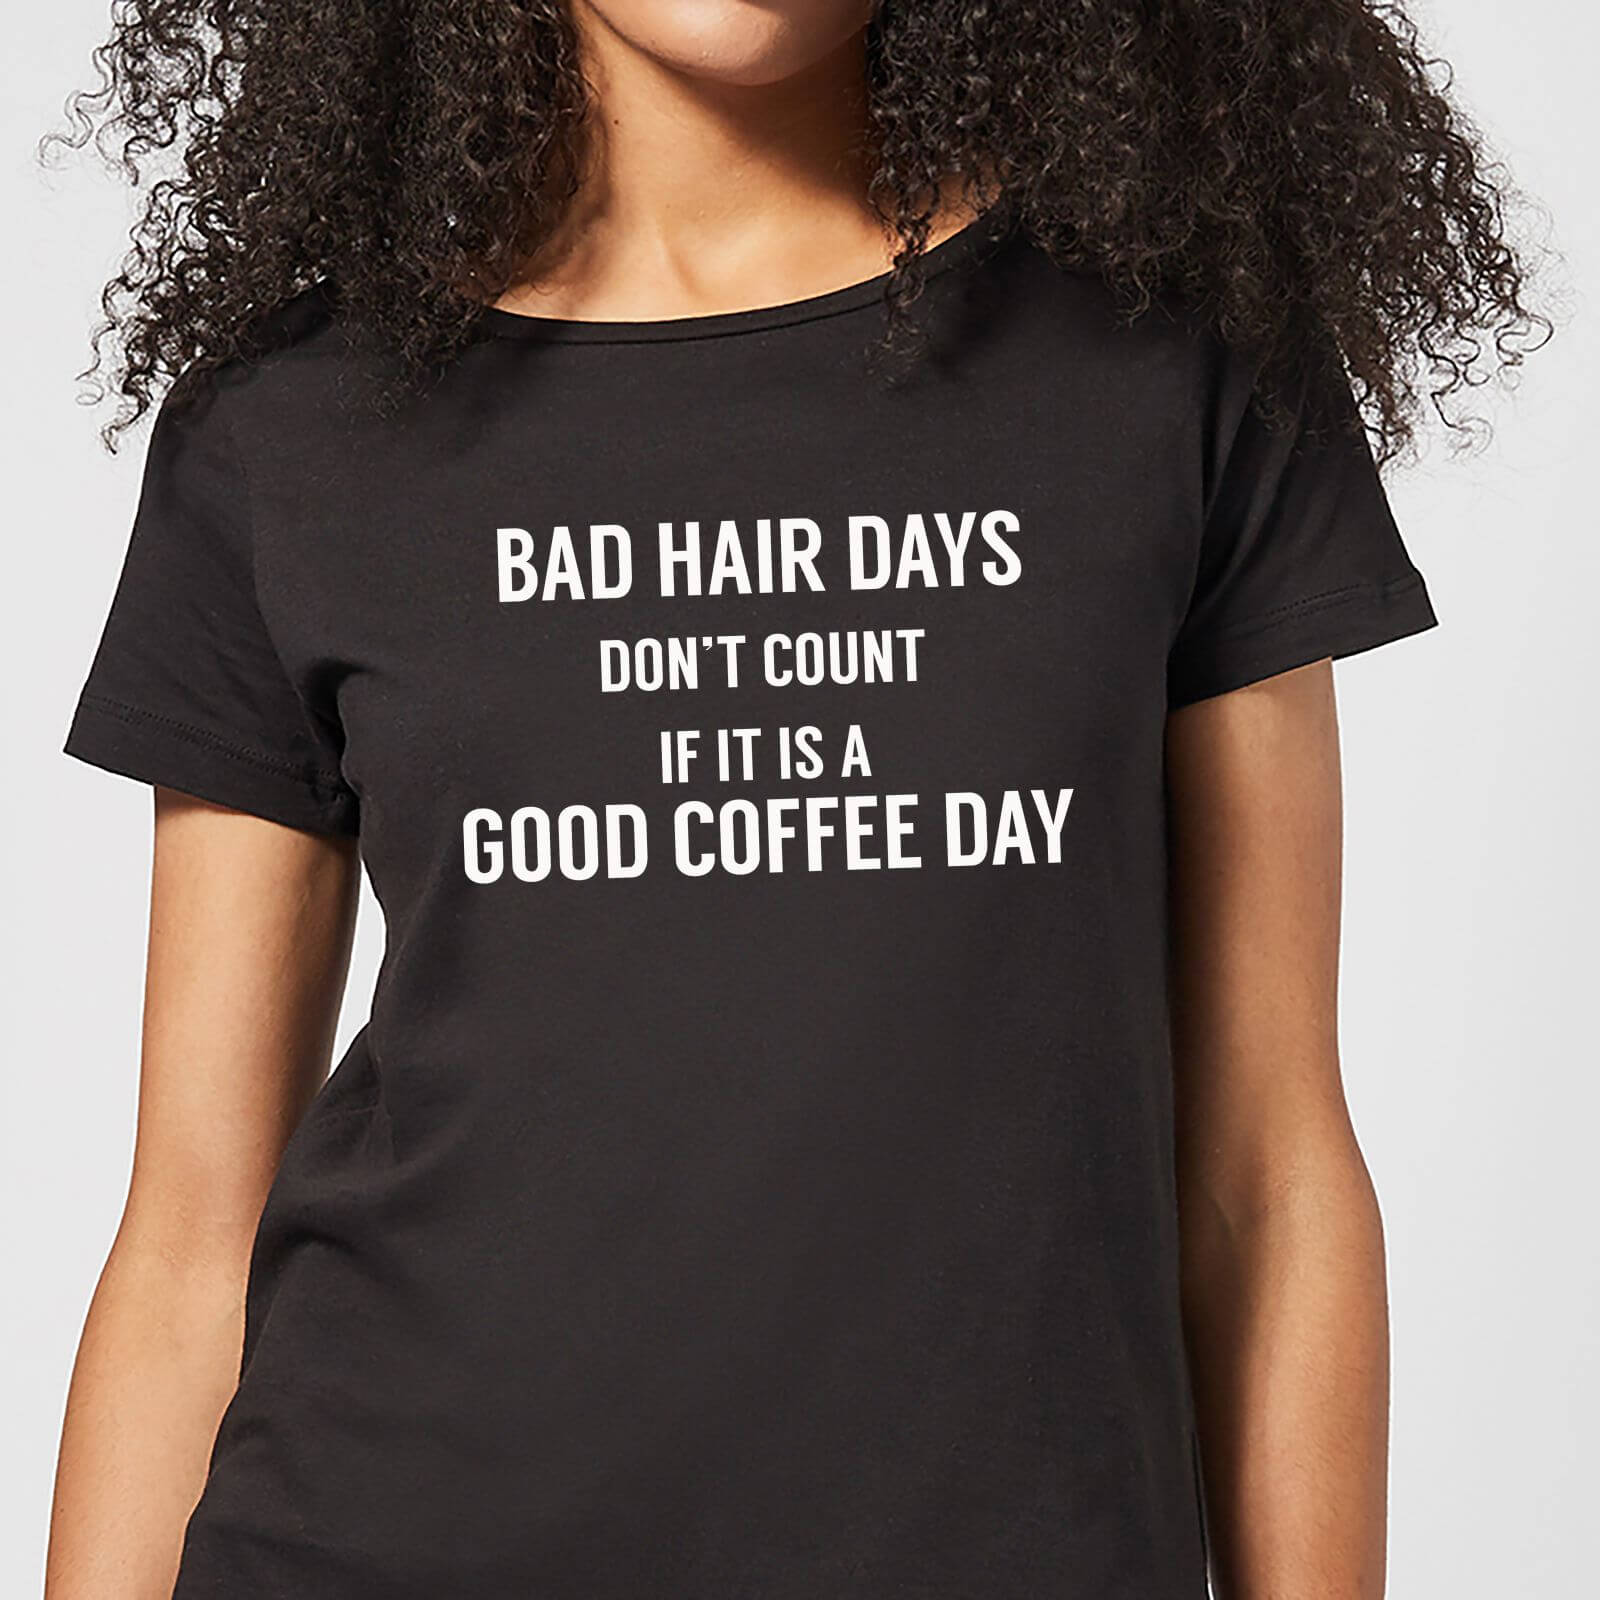 Bad Hair Days Don't Count Women's T-Shirt - Black - 3Xl - Black